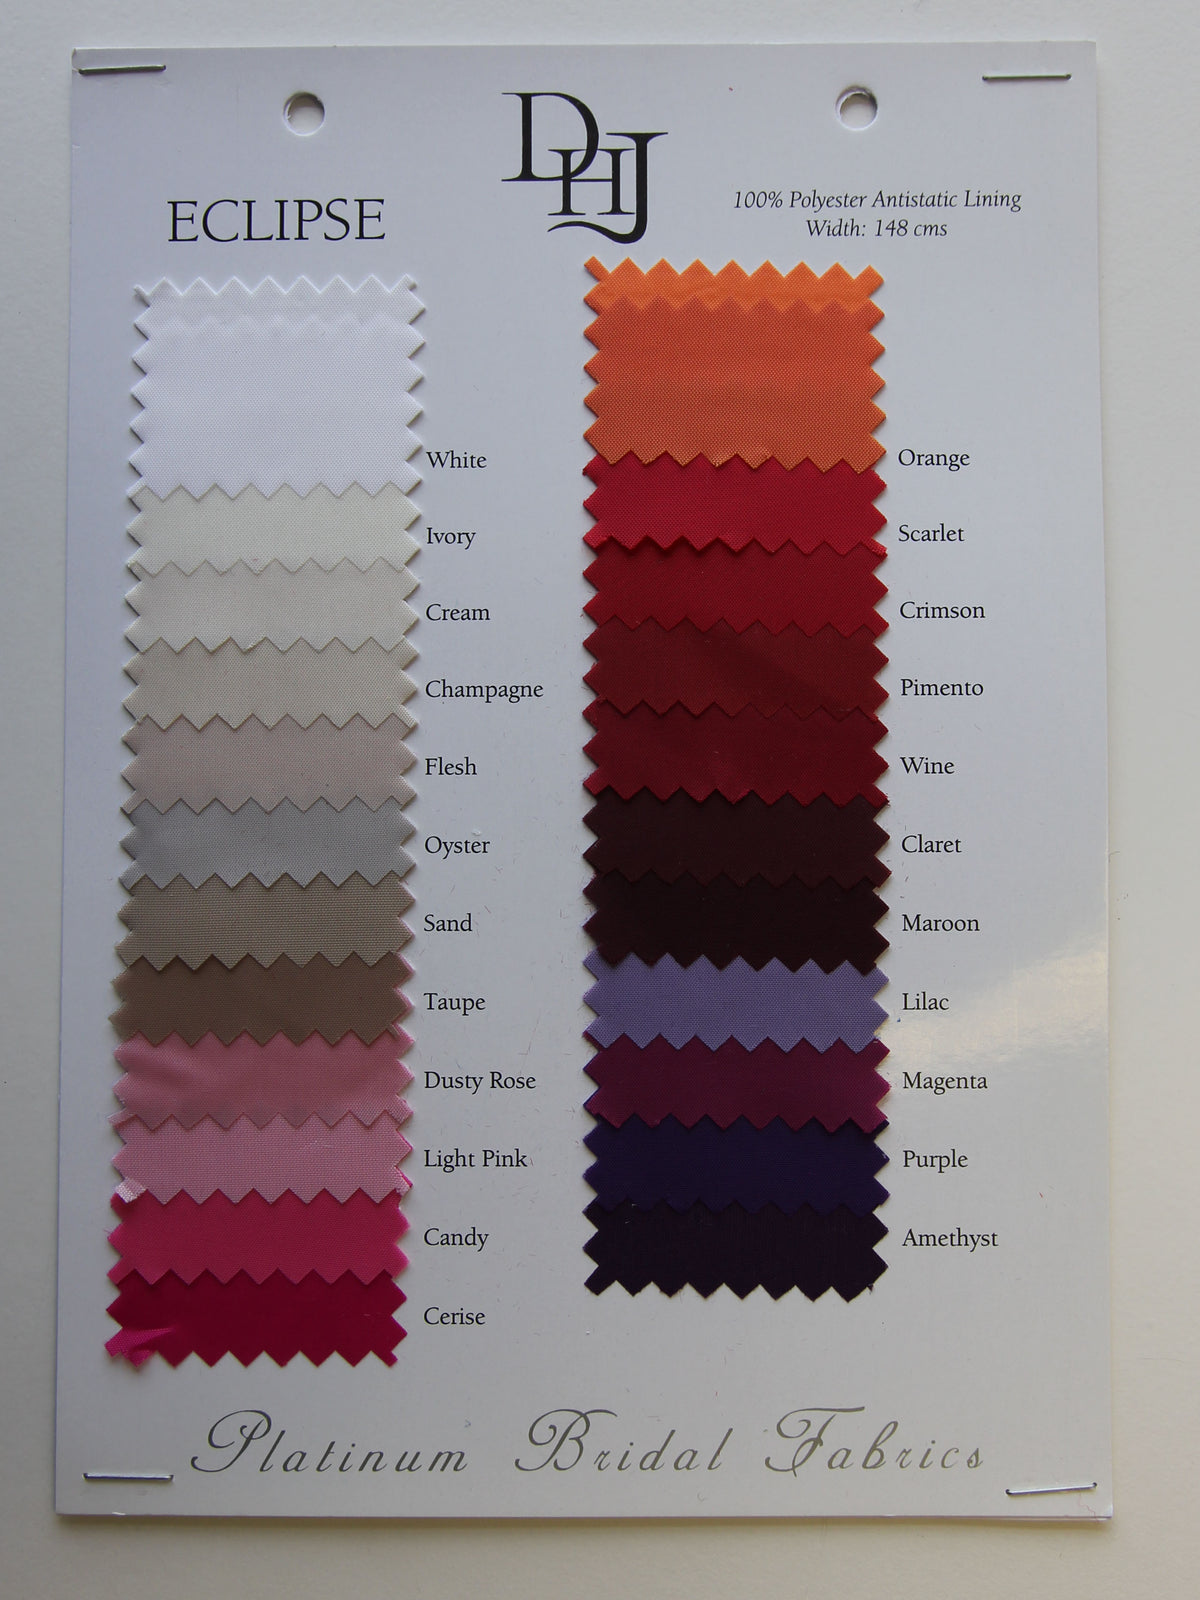 Carte d'échantillon de doublure antistatique en Polyester - Eclipse